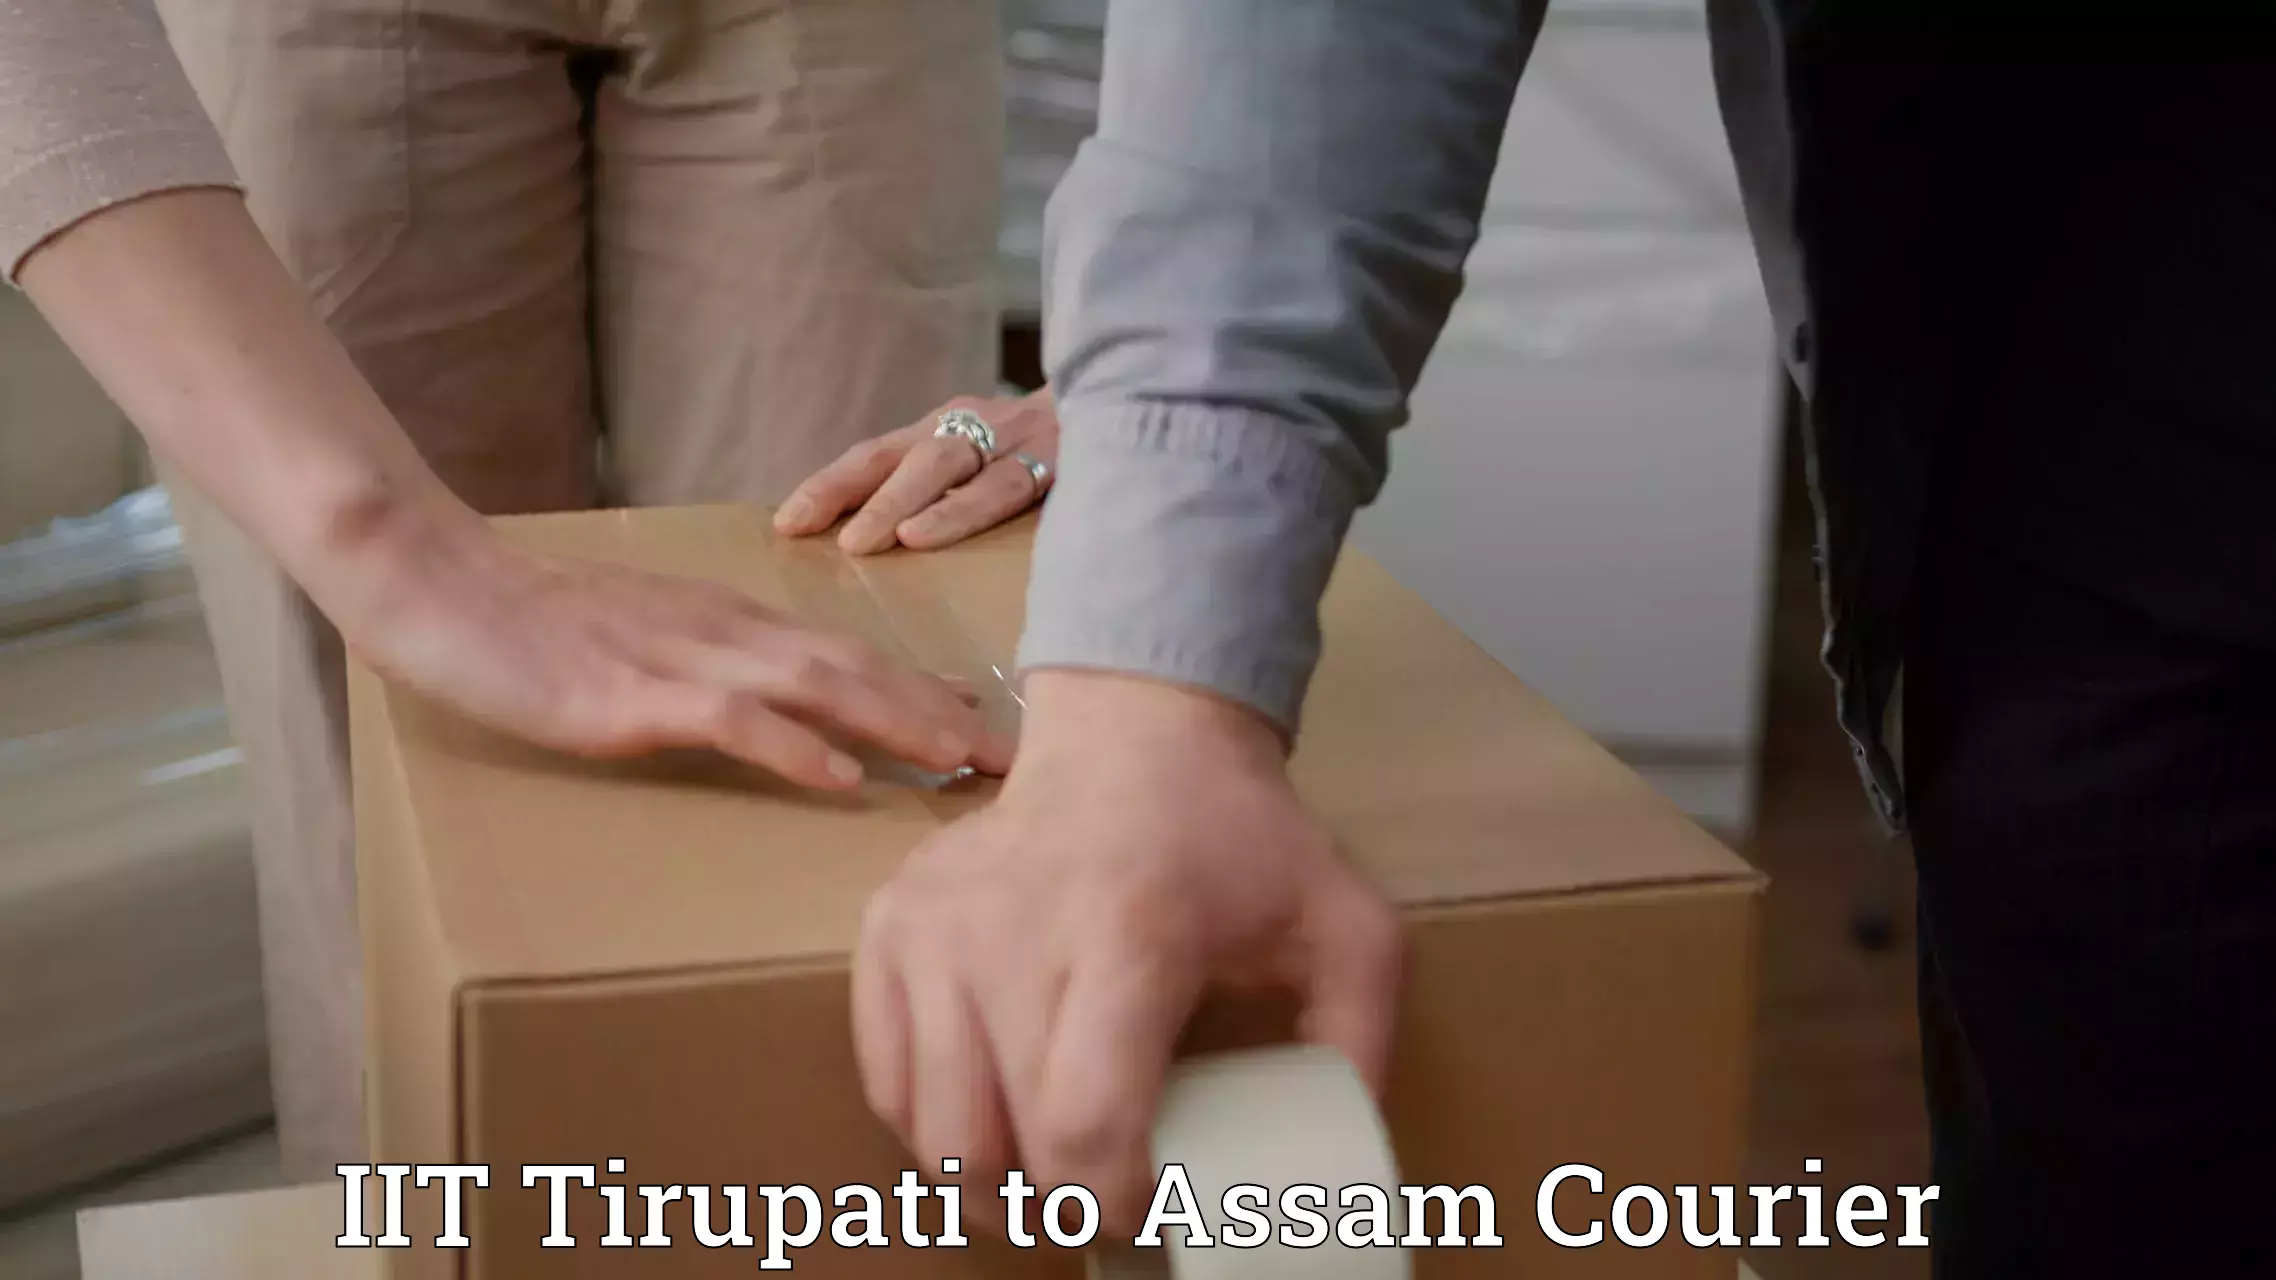 Digital courier platforms IIT Tirupati to Assam